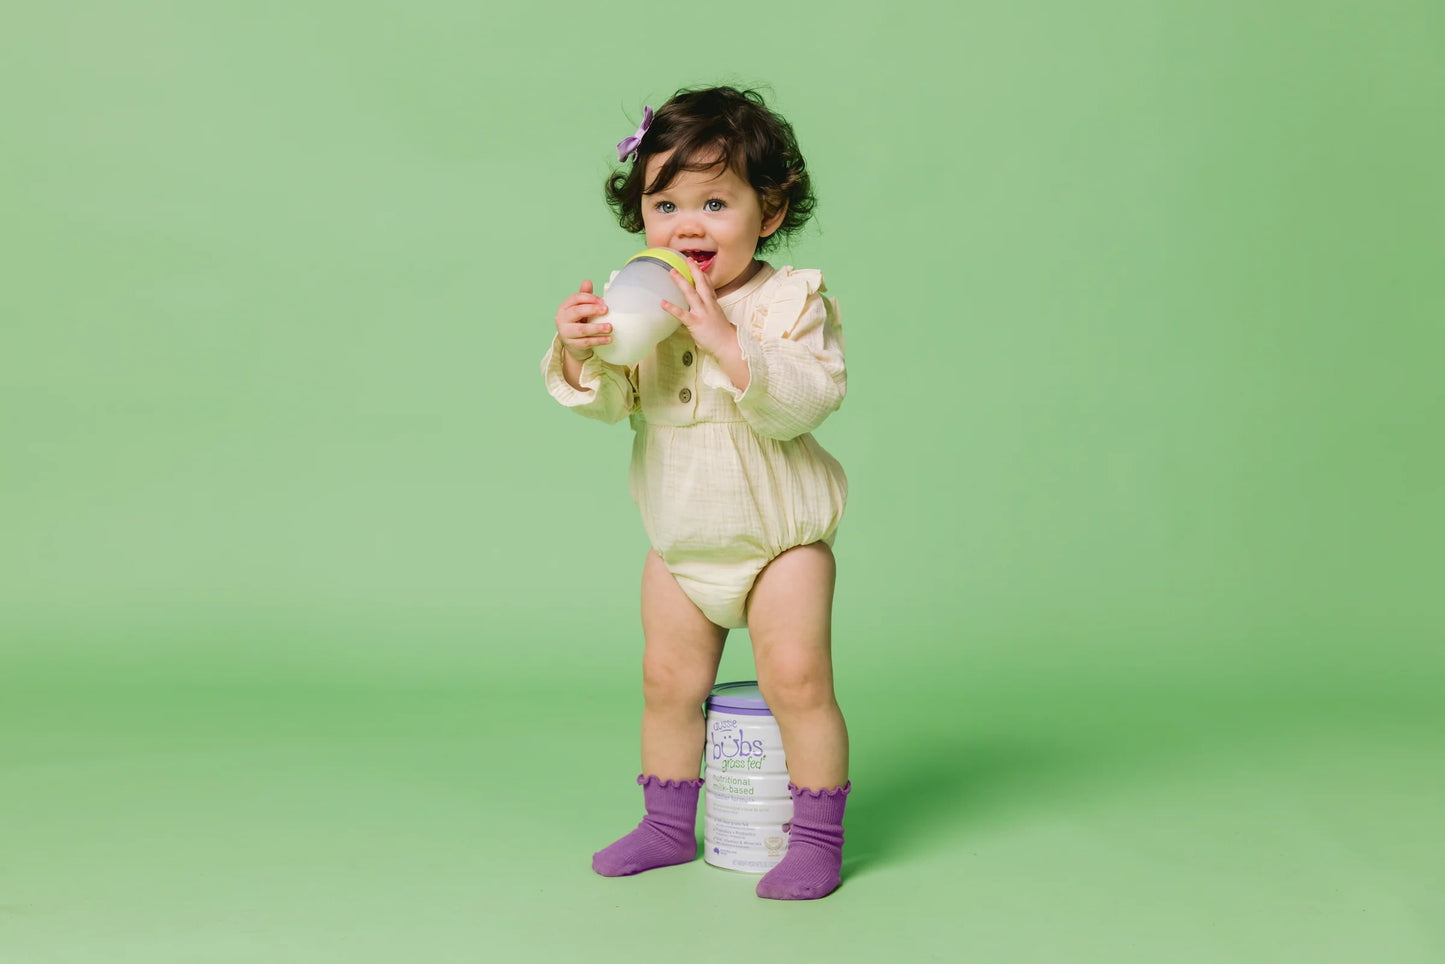 Aussie Bubs Grass Fed Nutritional Milk-based Toddler Formula (Stage 3, 12+ months)